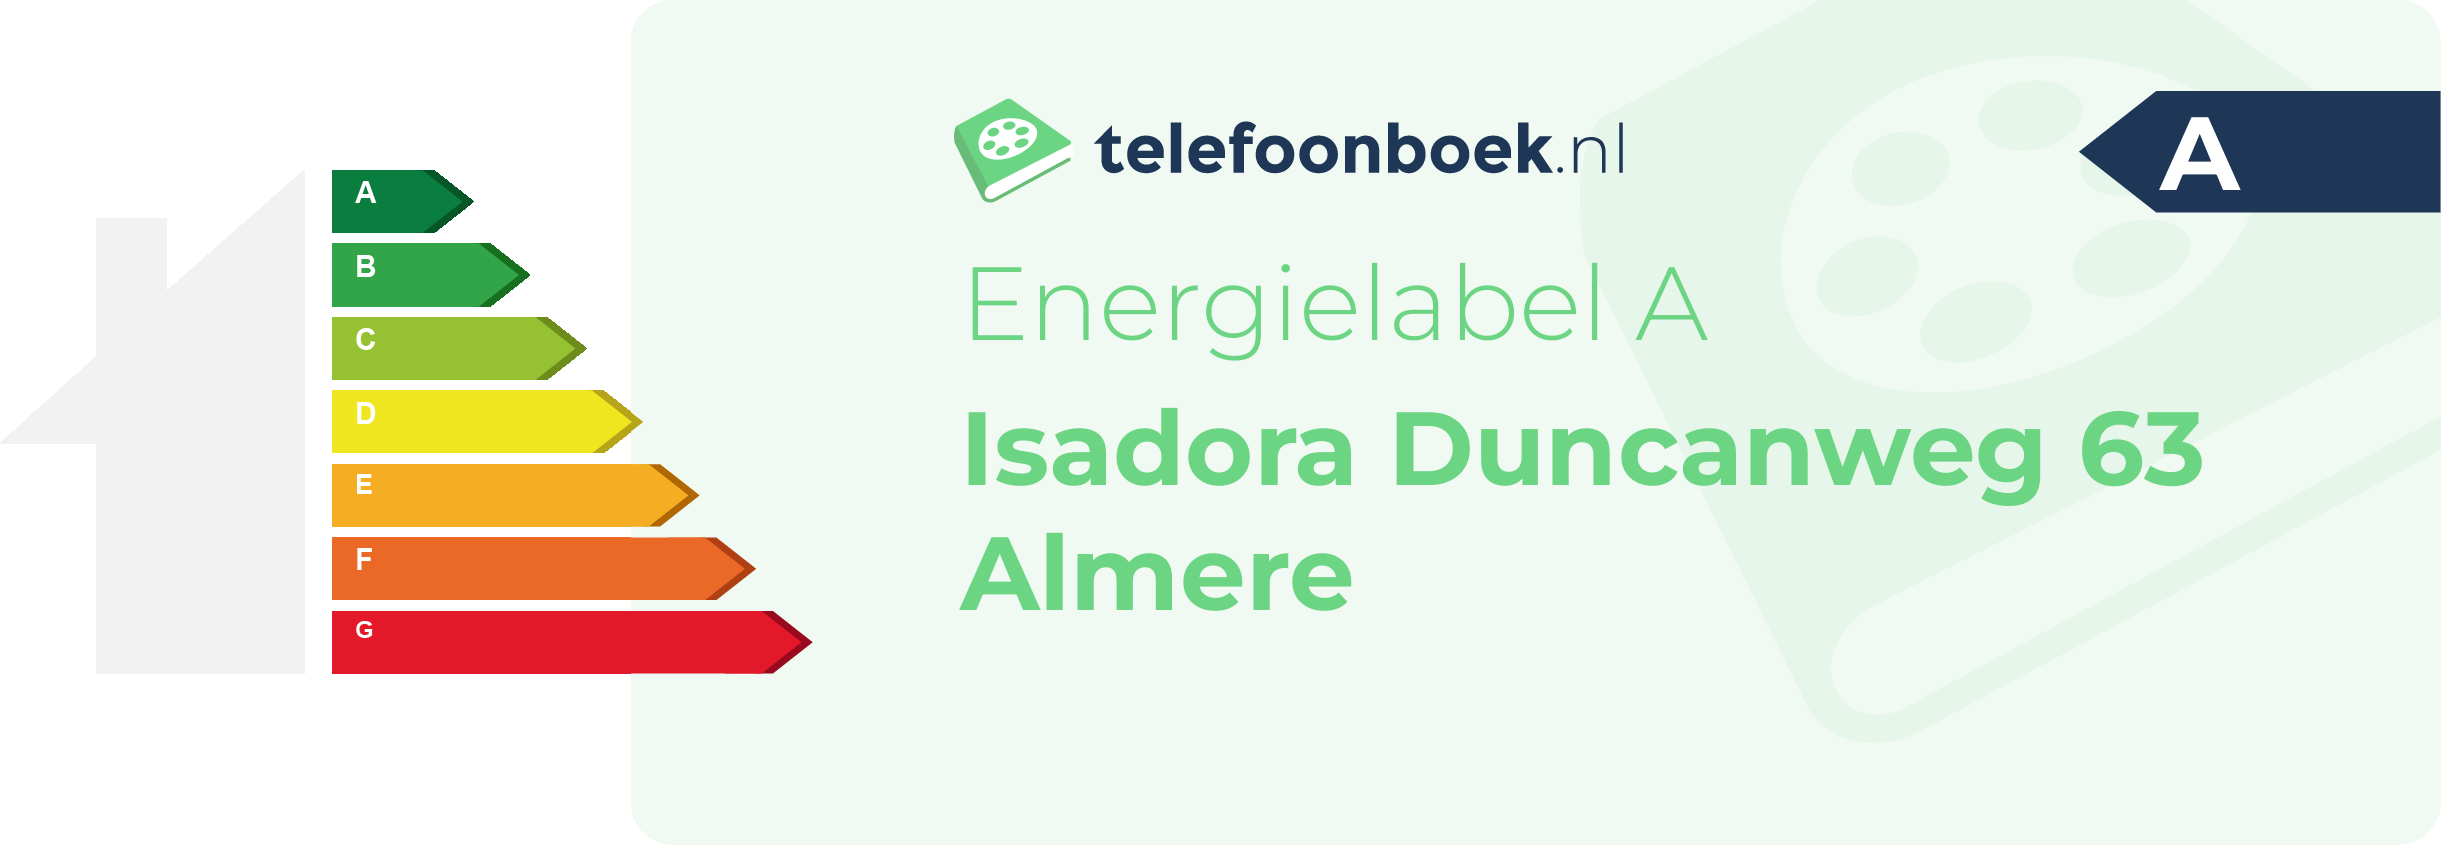 Energielabel Isadora Duncanweg 63 Almere